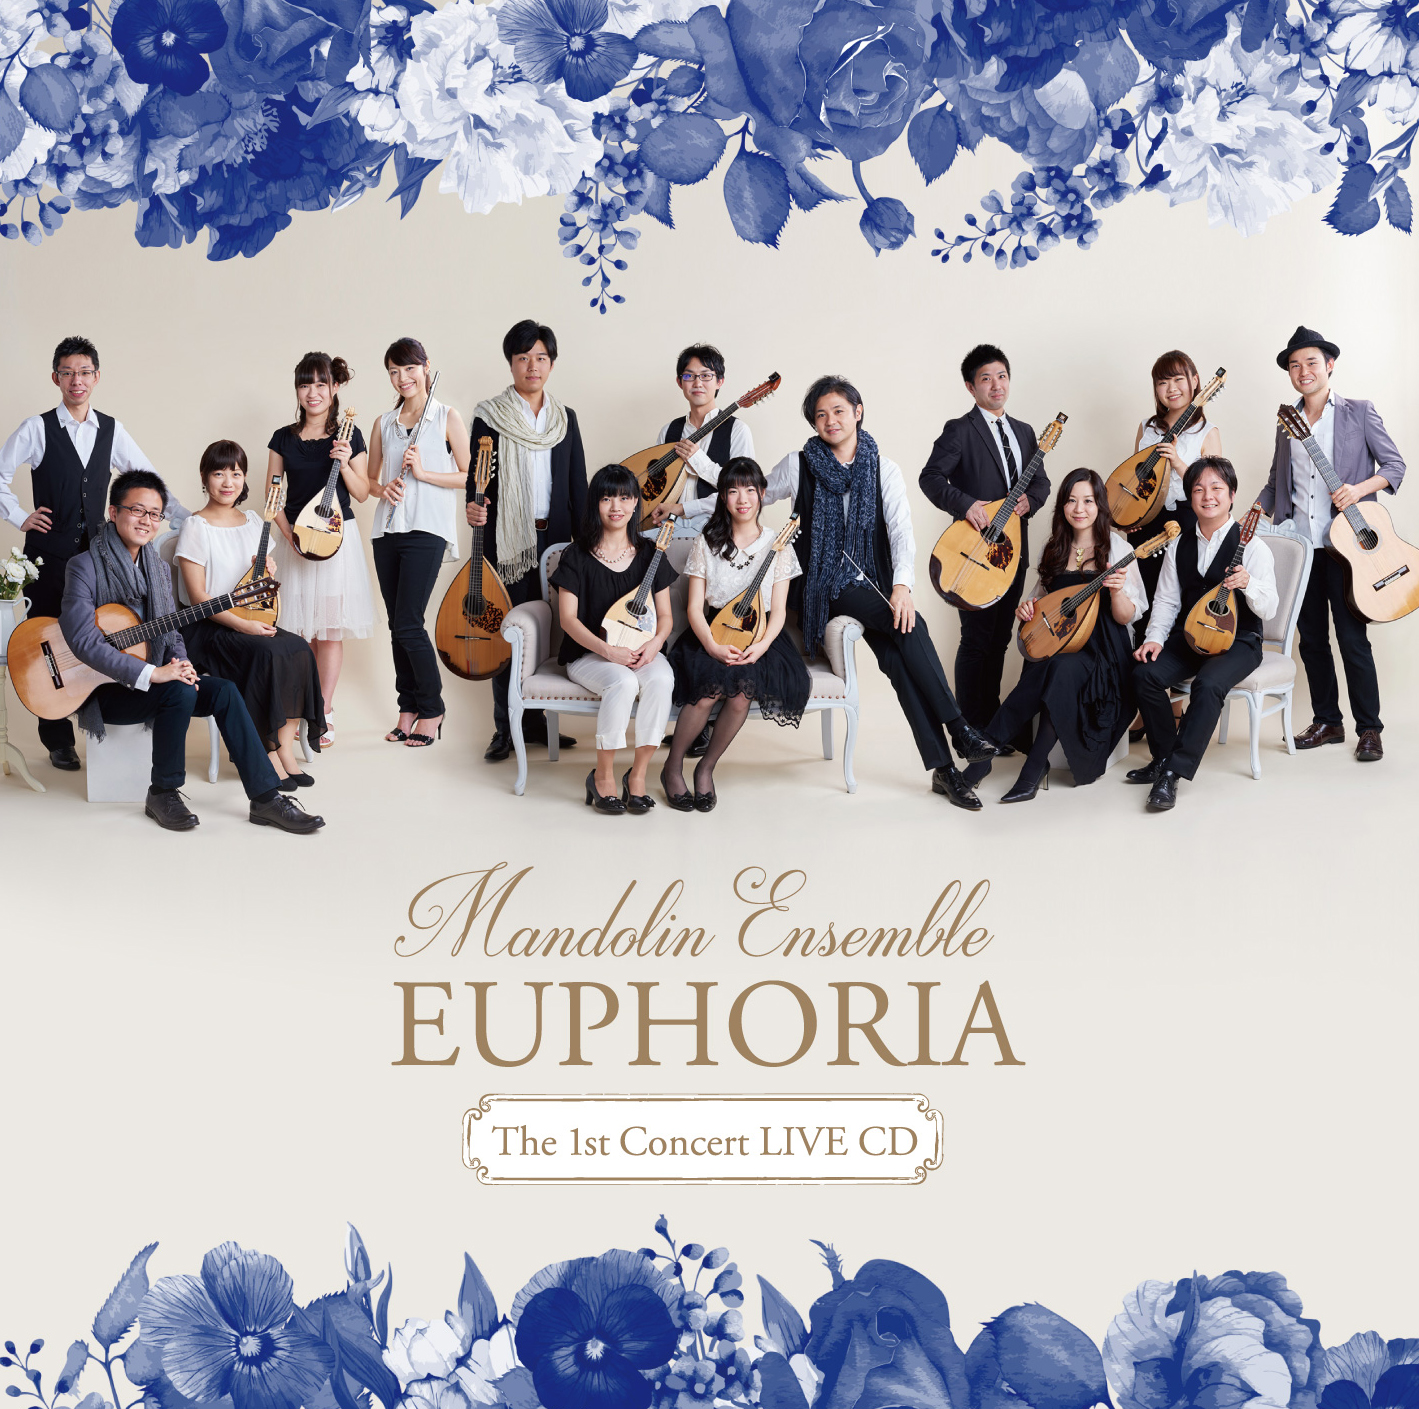 Mandolin Ensemble EUPHORIA 第1回演奏会 LIVE CD